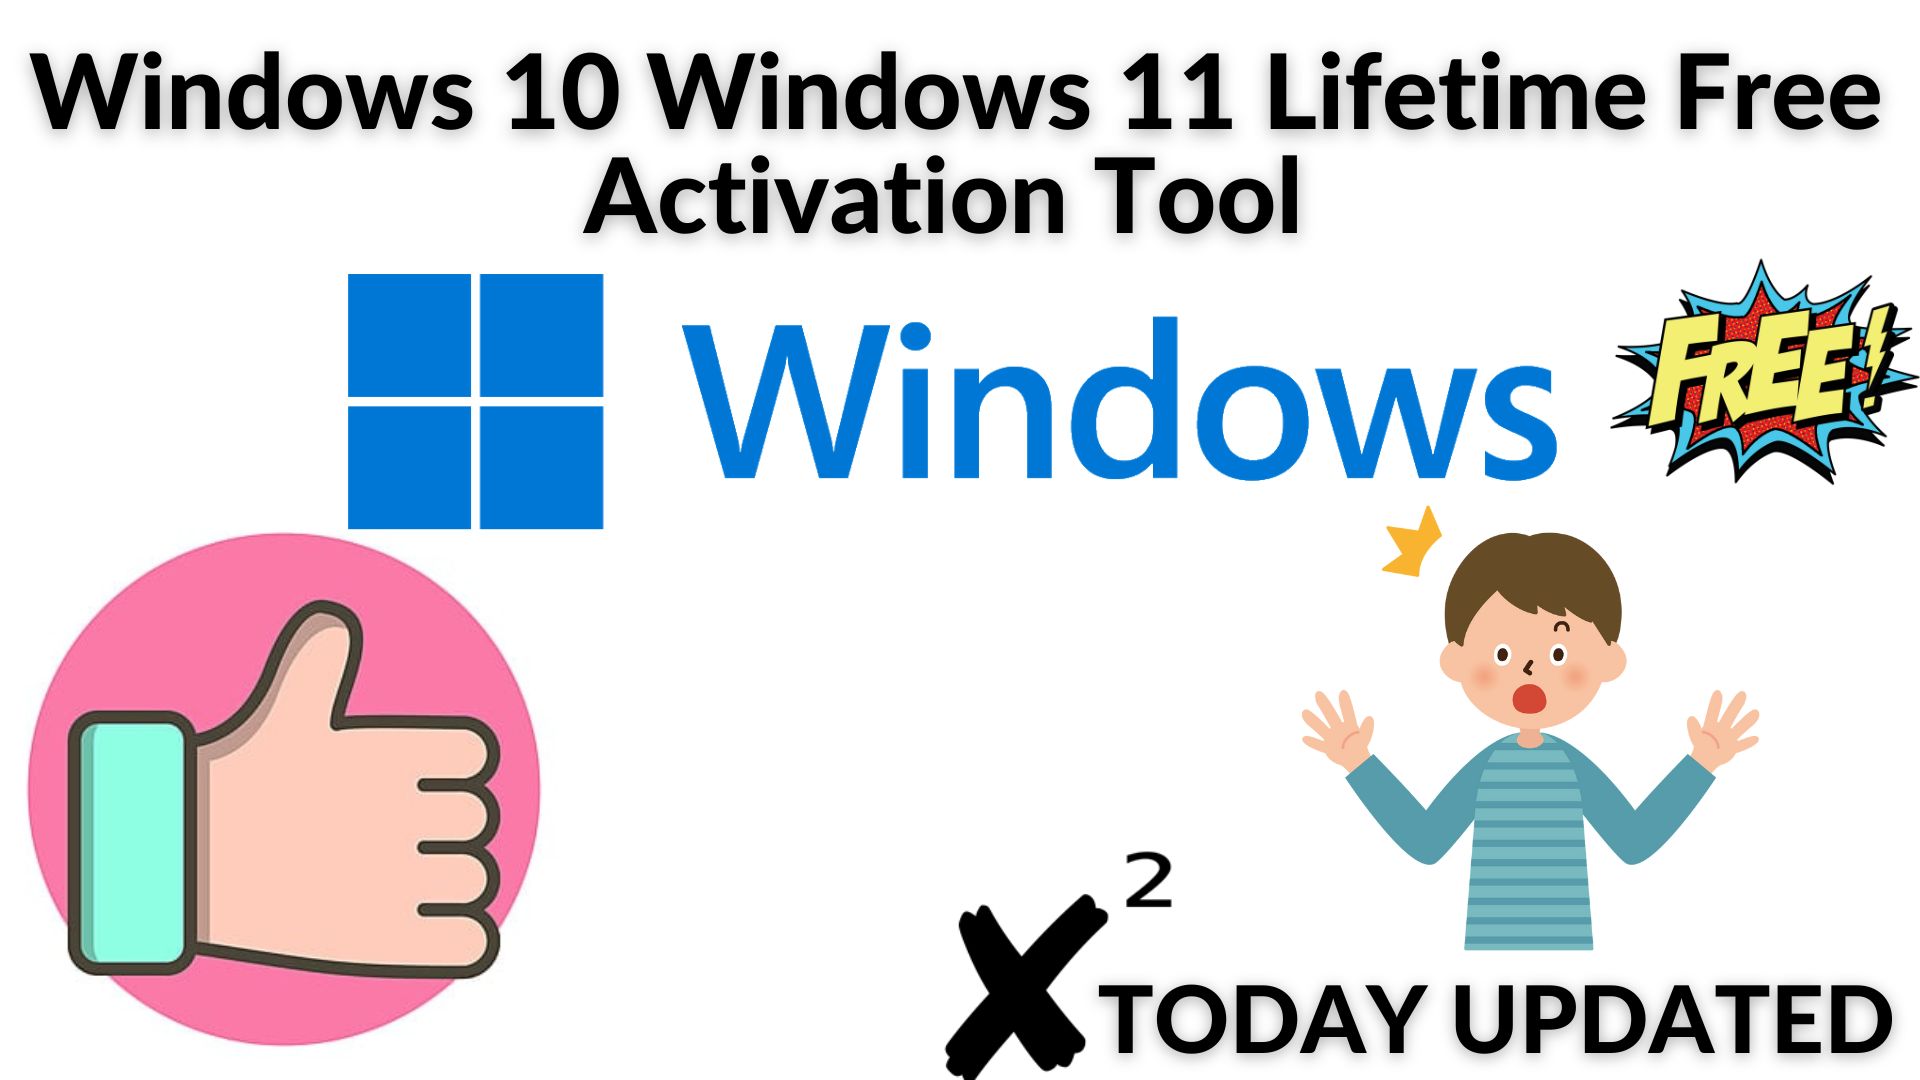 Windows 10 windows 11 lifetime free activation tool 